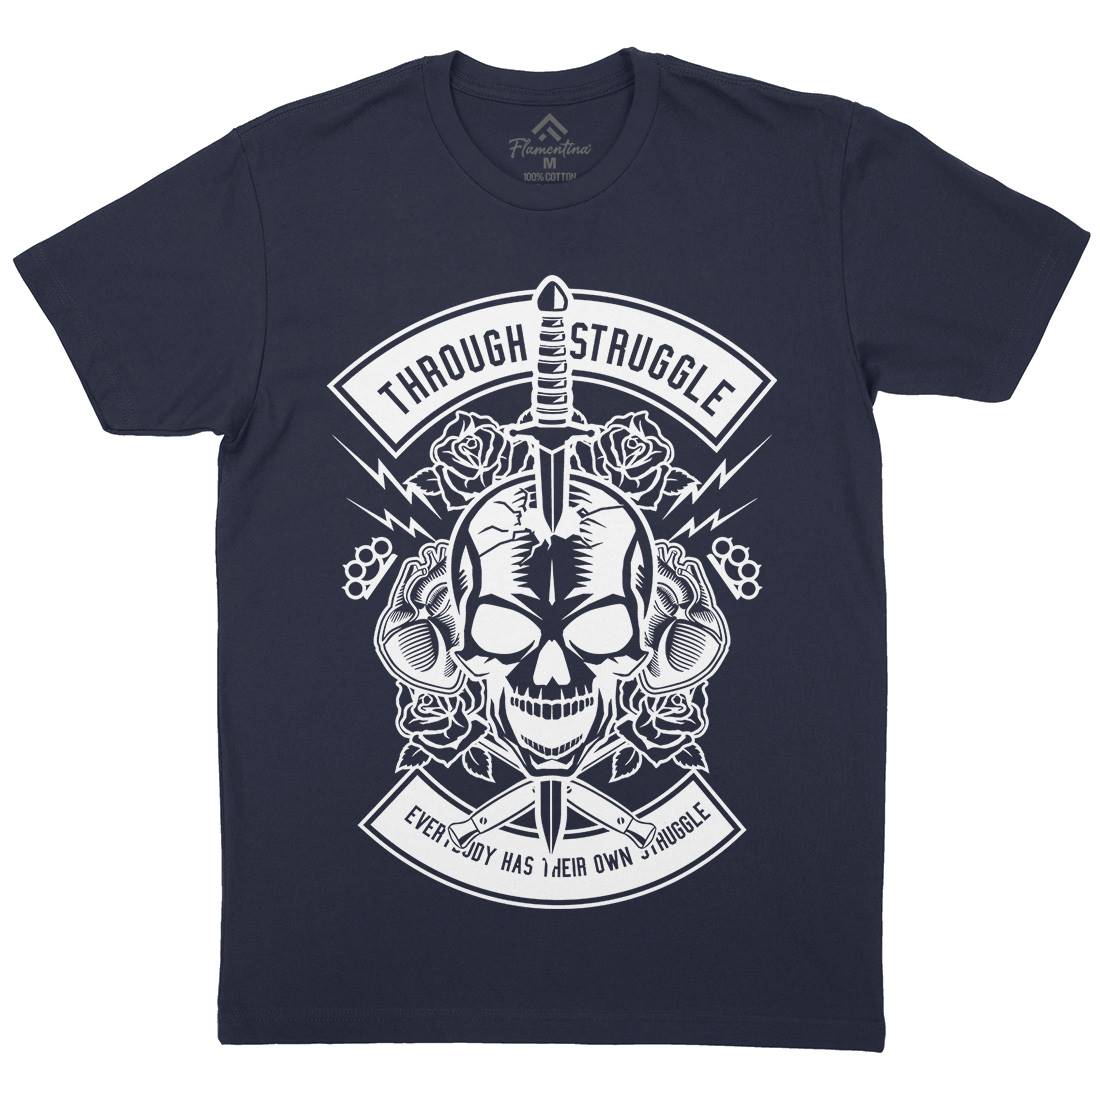 Through Struggle Mens Crew Neck T-Shirt American B655